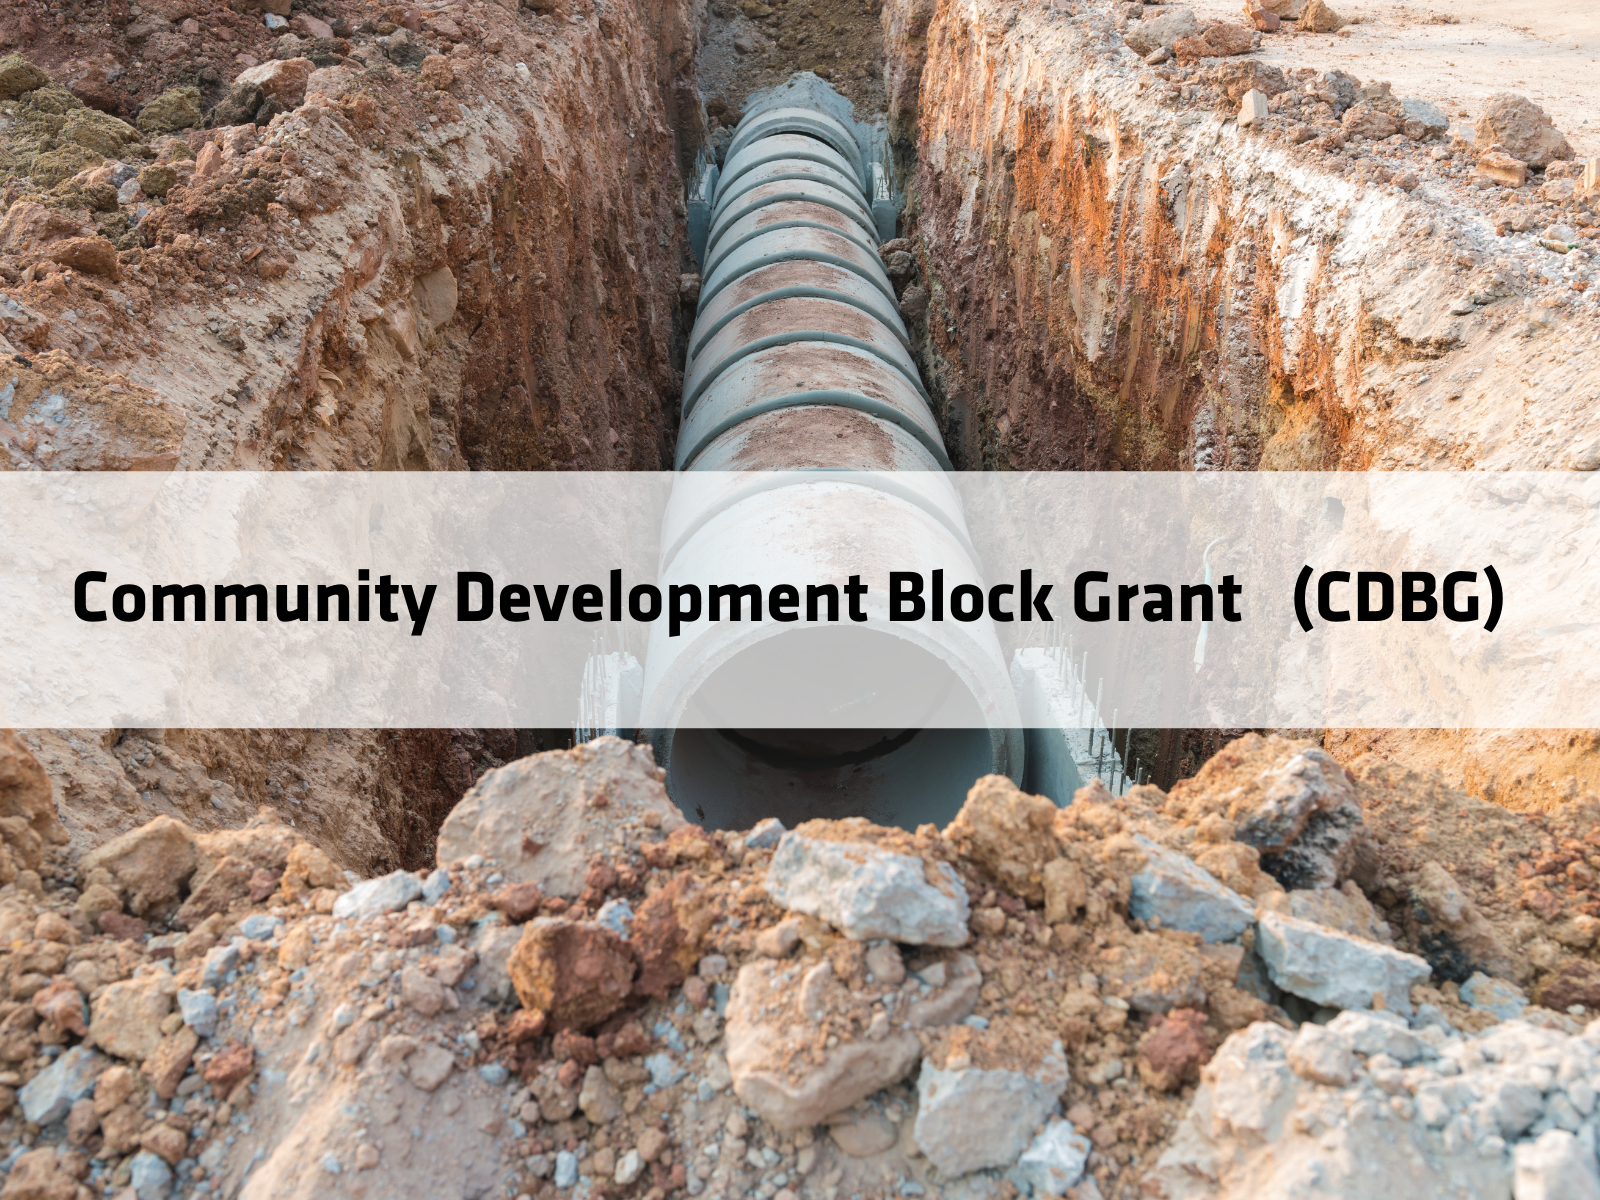 Community Development Block Grant (CDBG) State Program